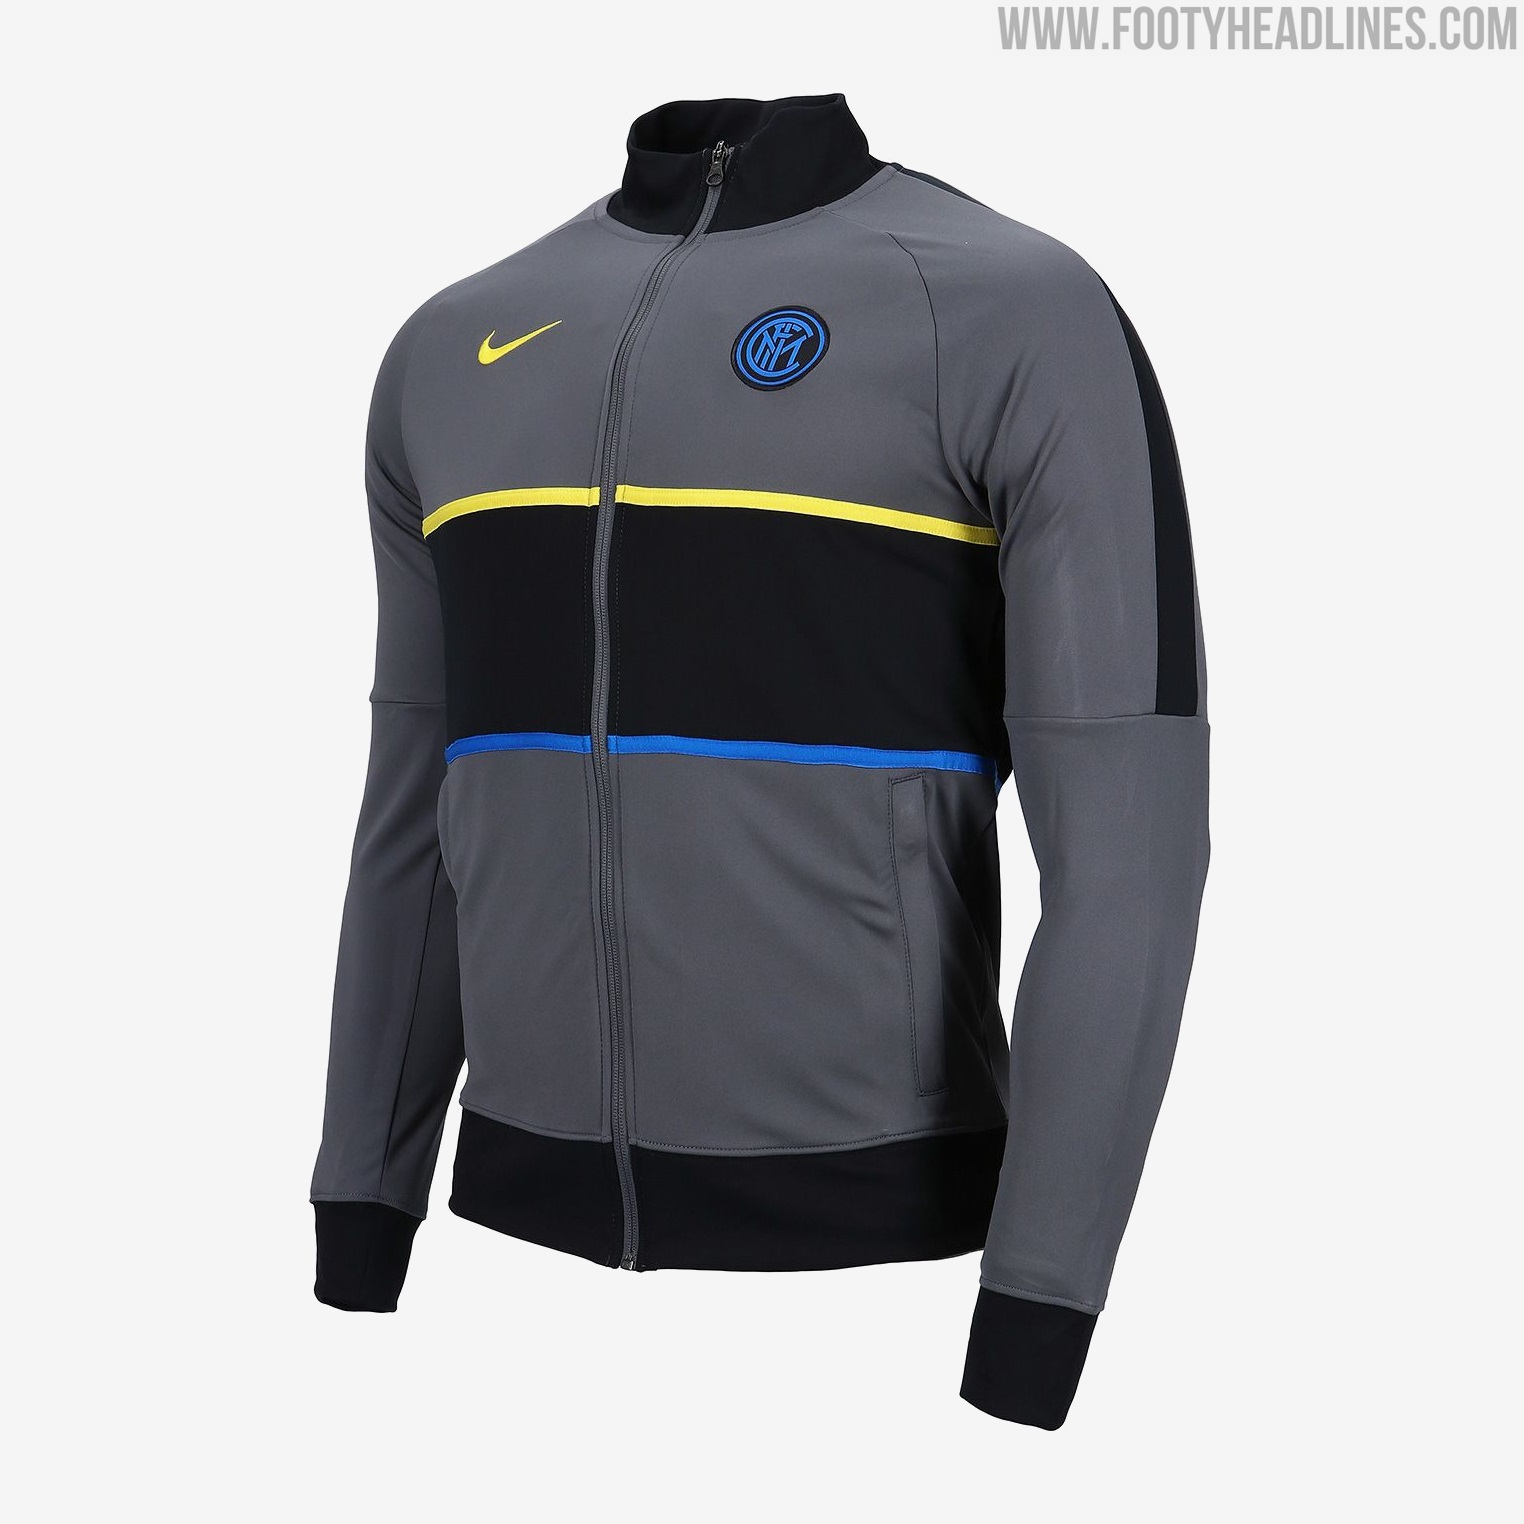 Inter Milan Wears Amazing Nike Anthem Jacket - Footy Headlines